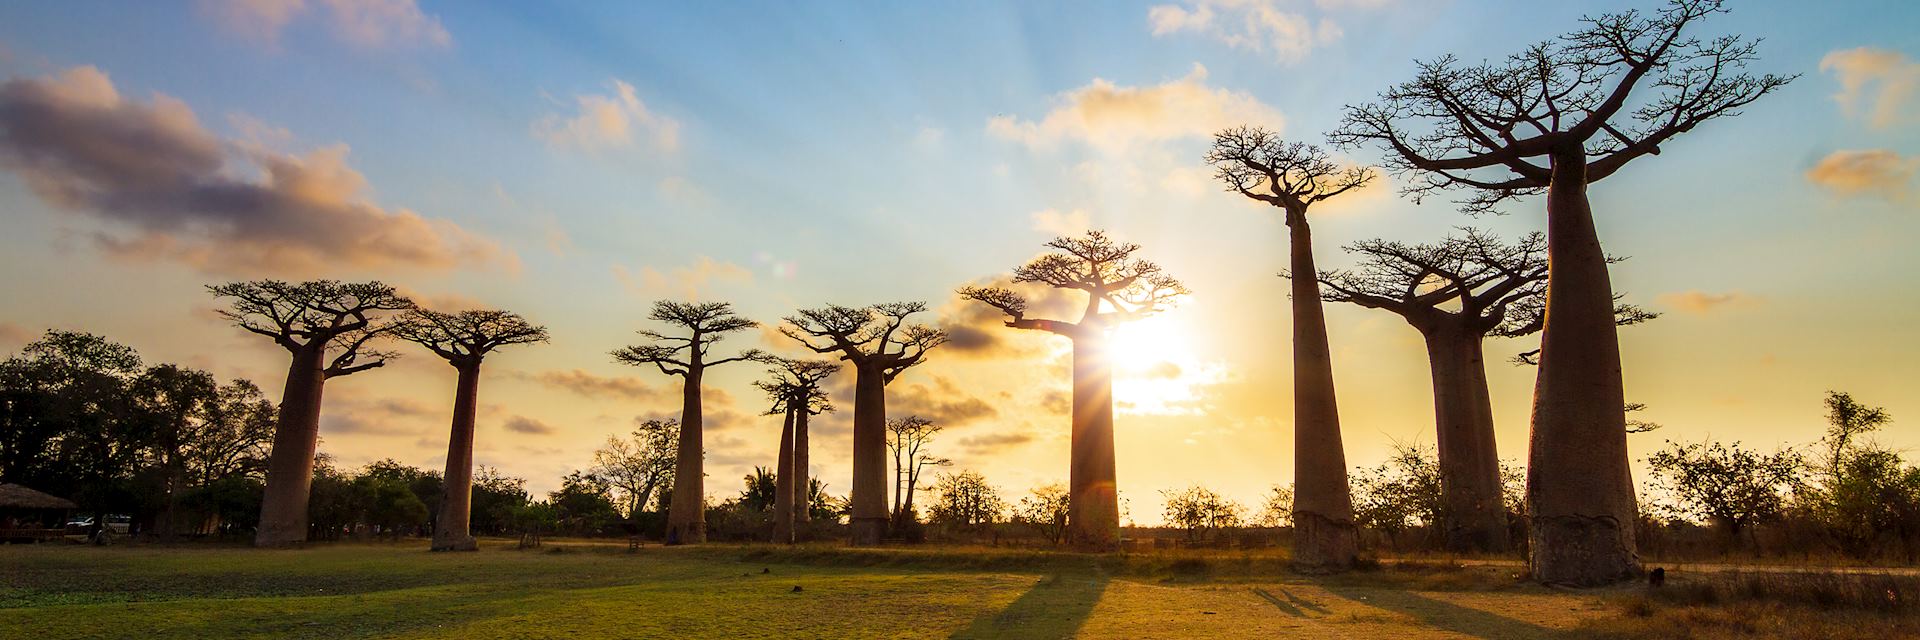 Baobab trees